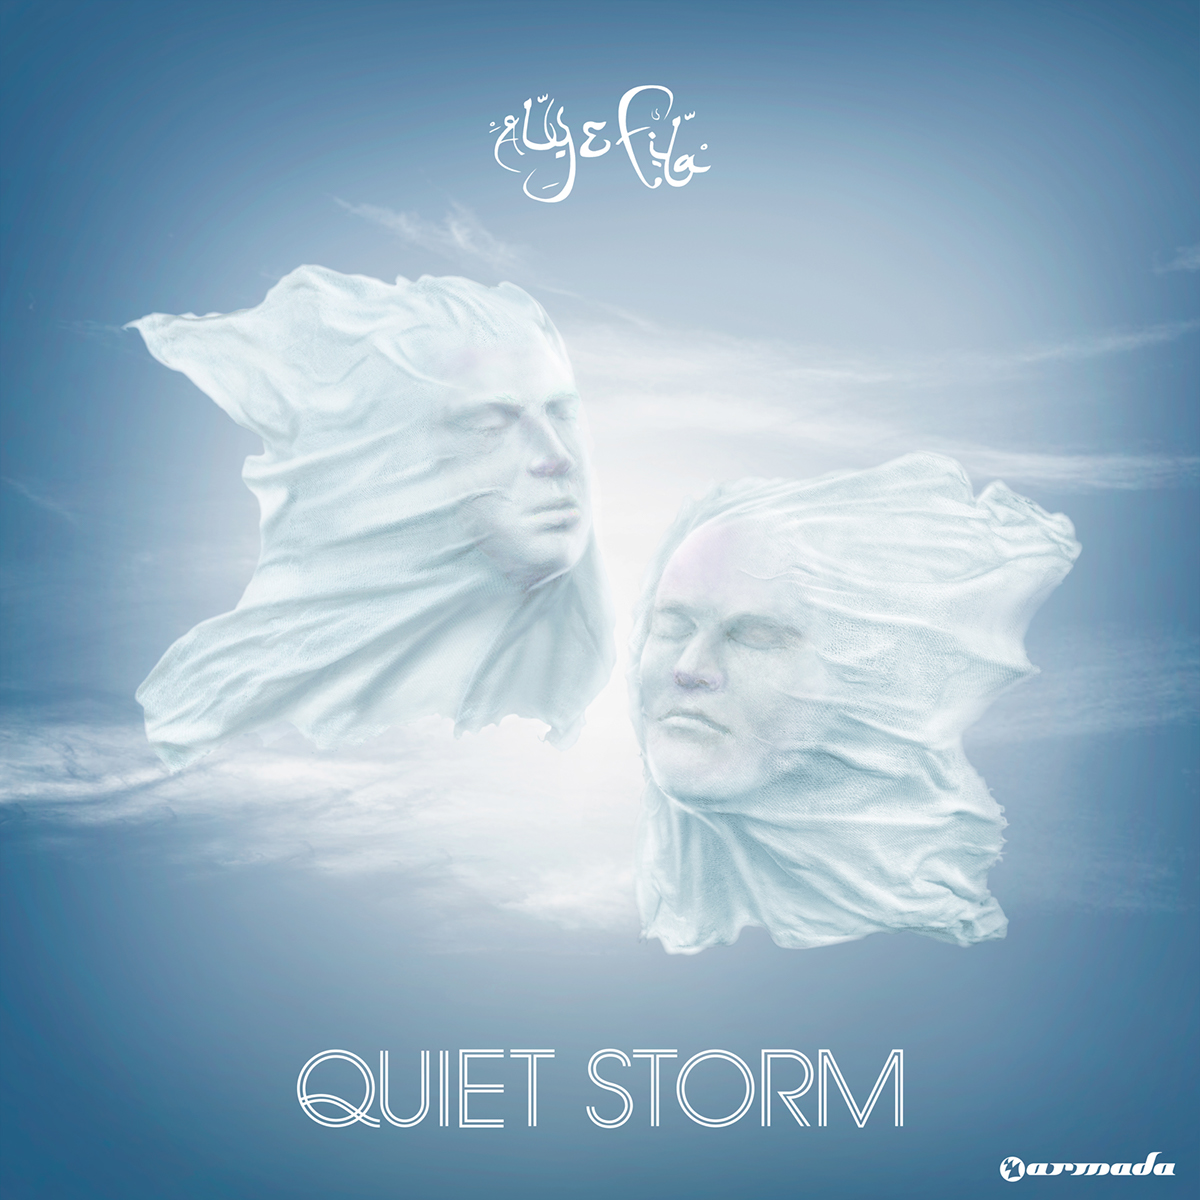 aly ali fila quiet storm future sound amazing air wind cloud egypt trance dj